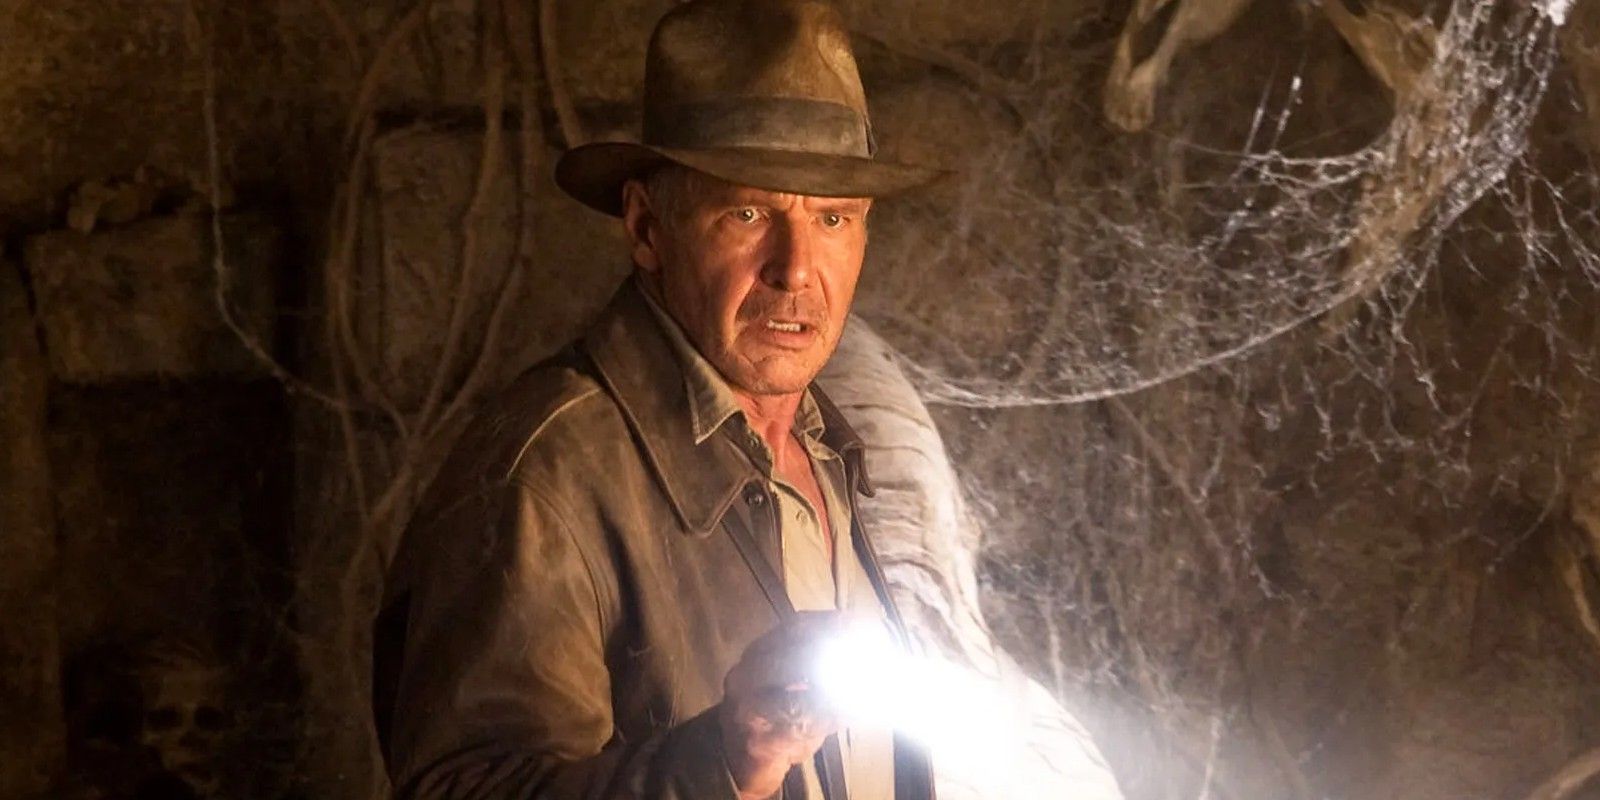 Harrison Ford playing Indiana Jones